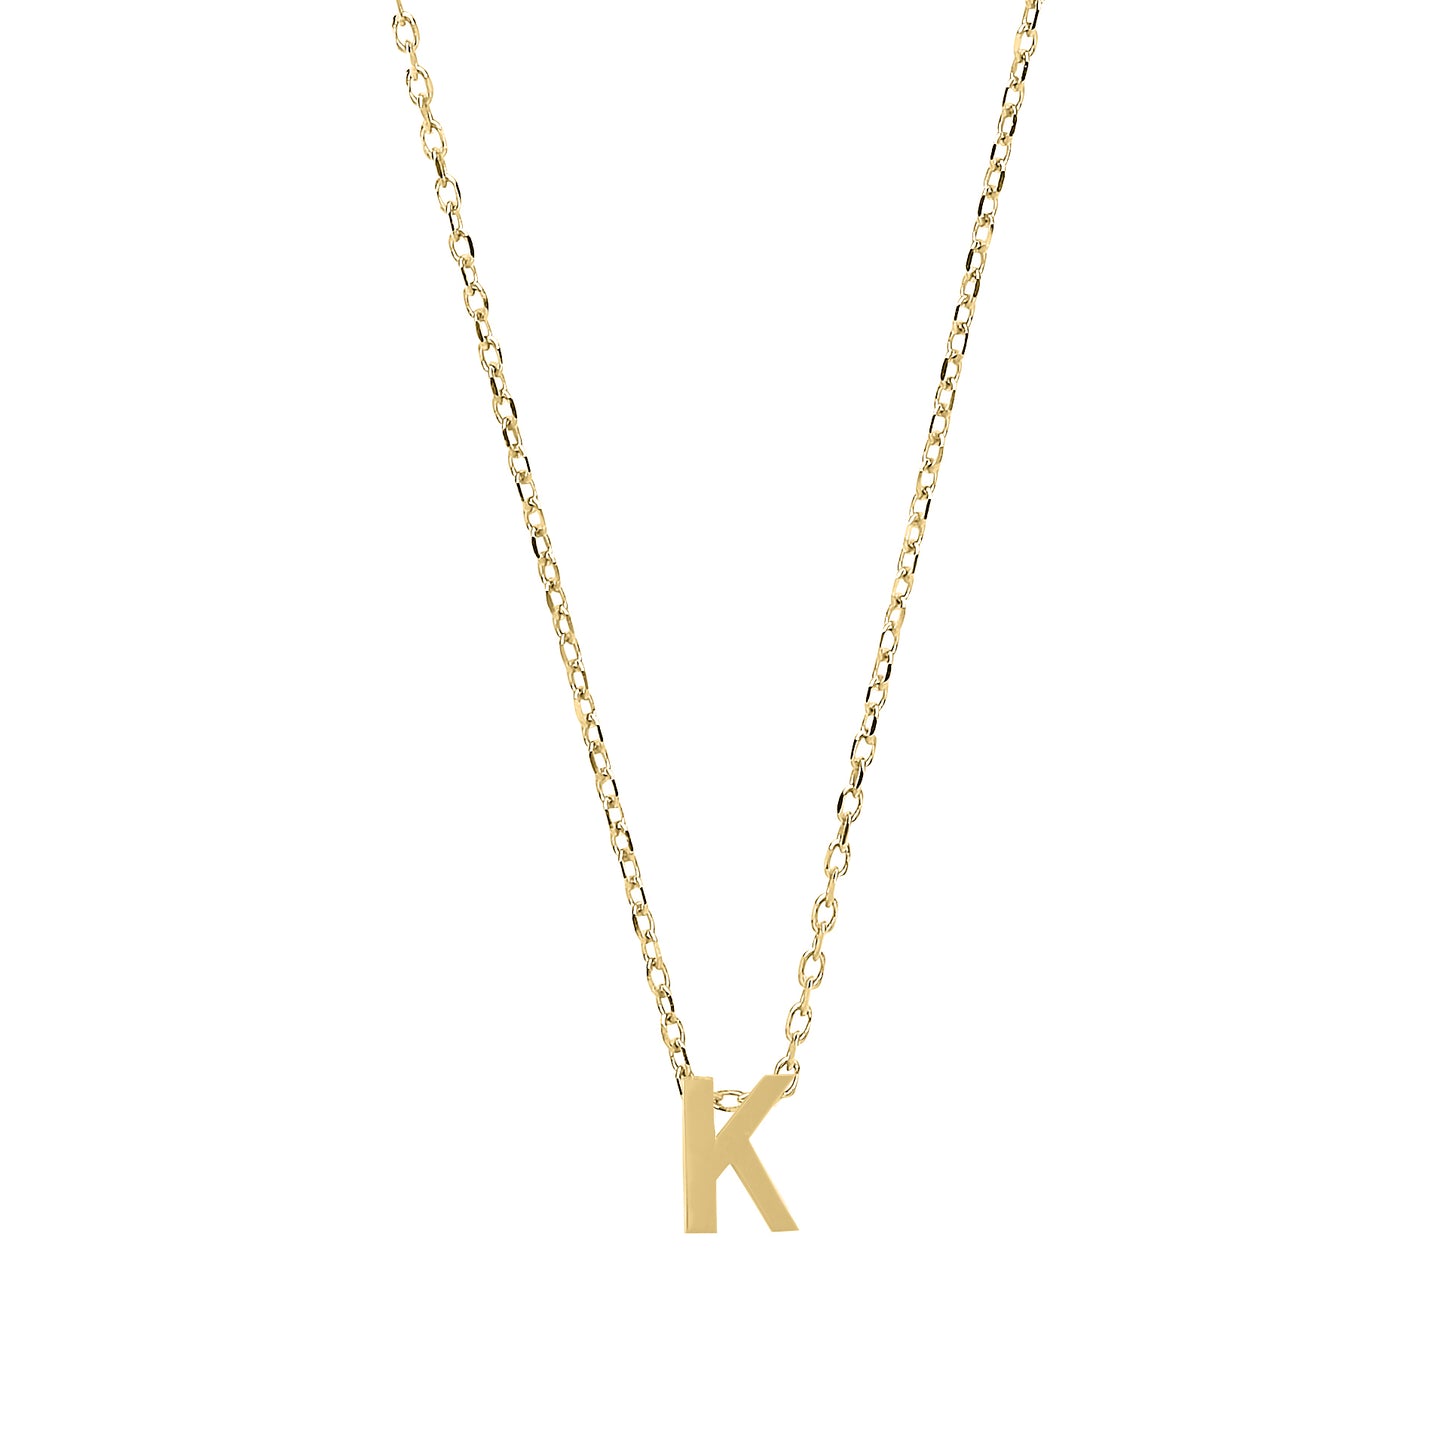 9ct Gold  Letter K Initial Pendant Necklace 17 inch 43cm - G9P6032K